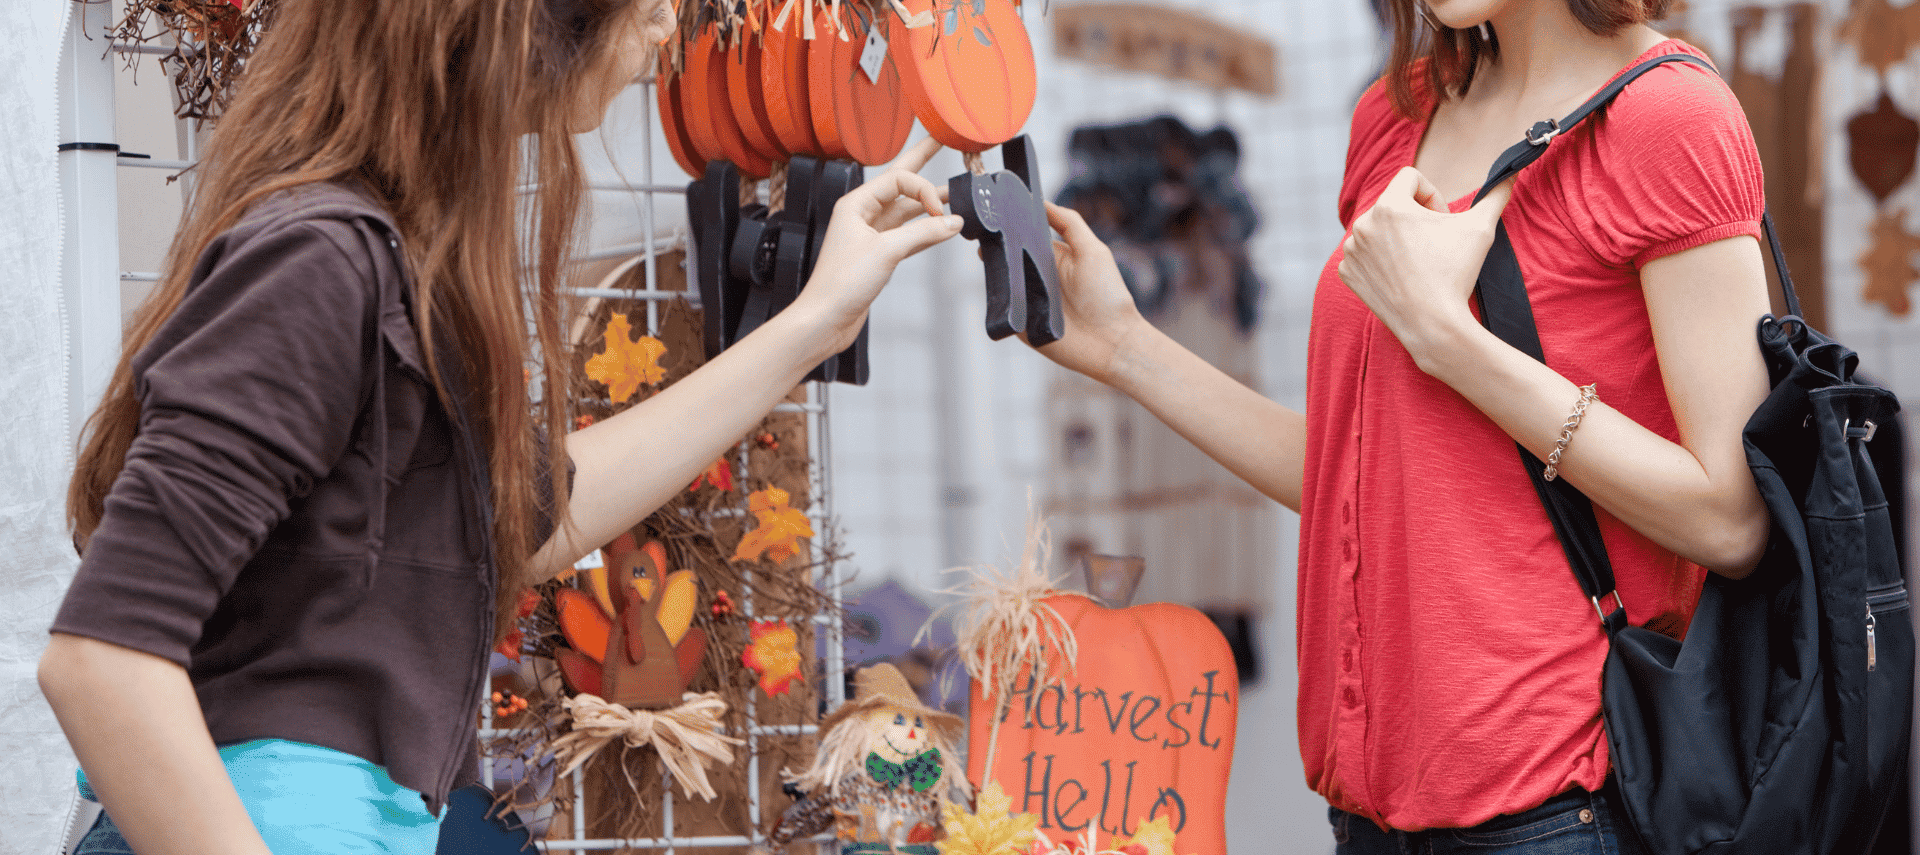 Women shopping at a craft fair with fall decor